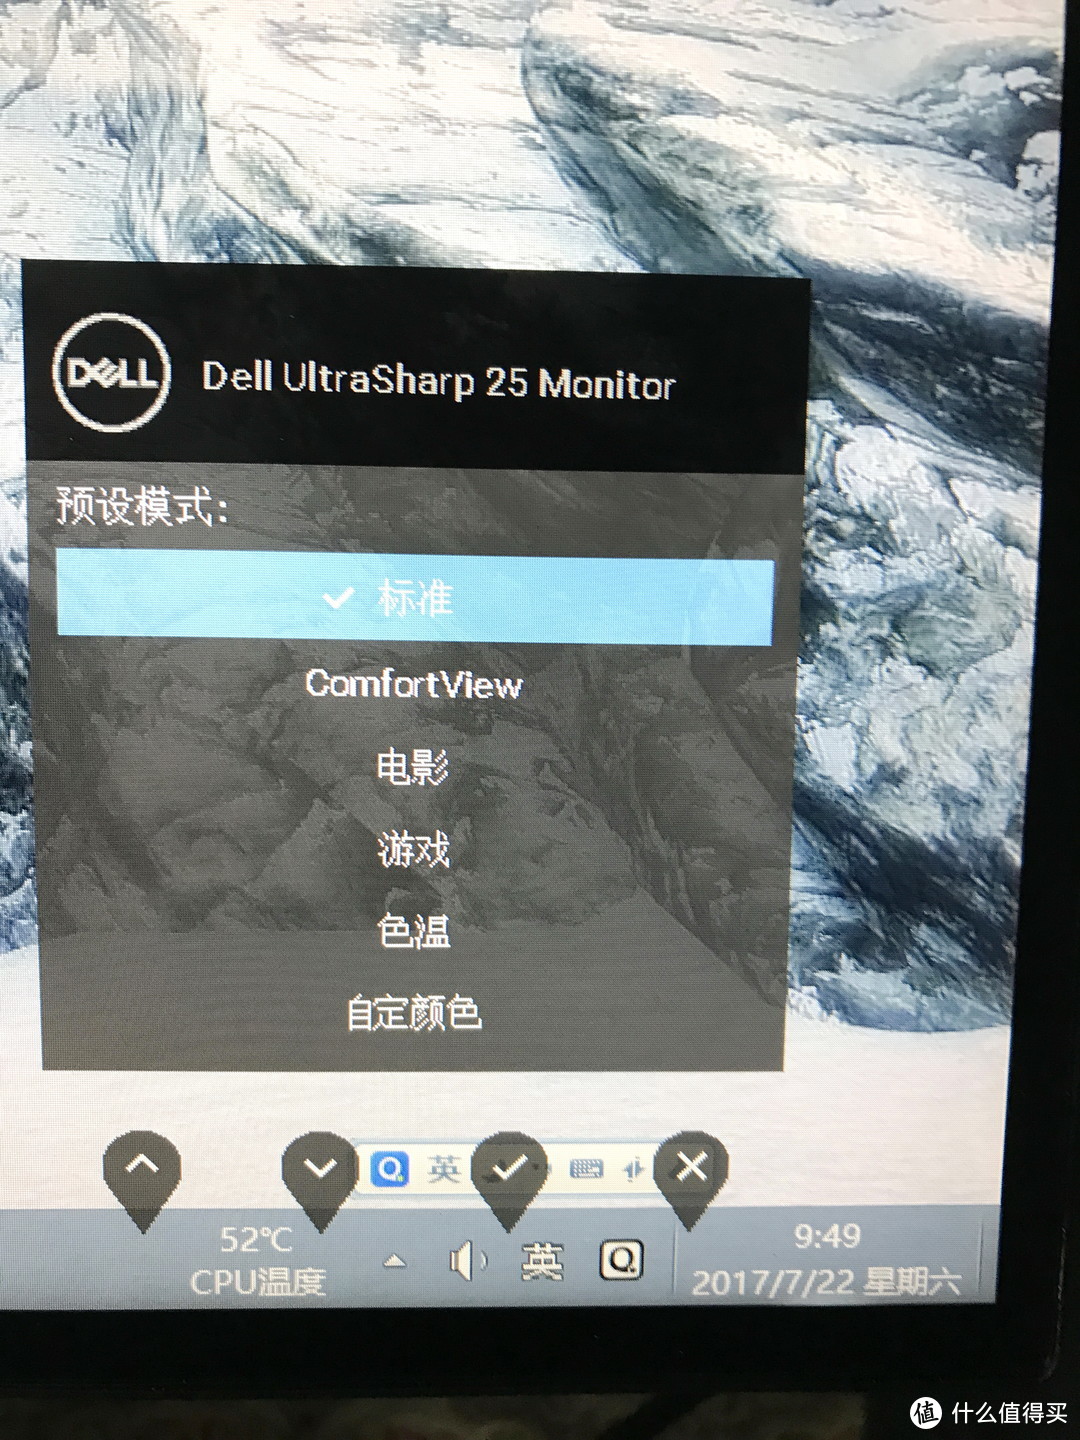 #本站首晒#夺命岛入手 Dell 戴尔 U2518DR 25英寸 UltraSharp 显示器